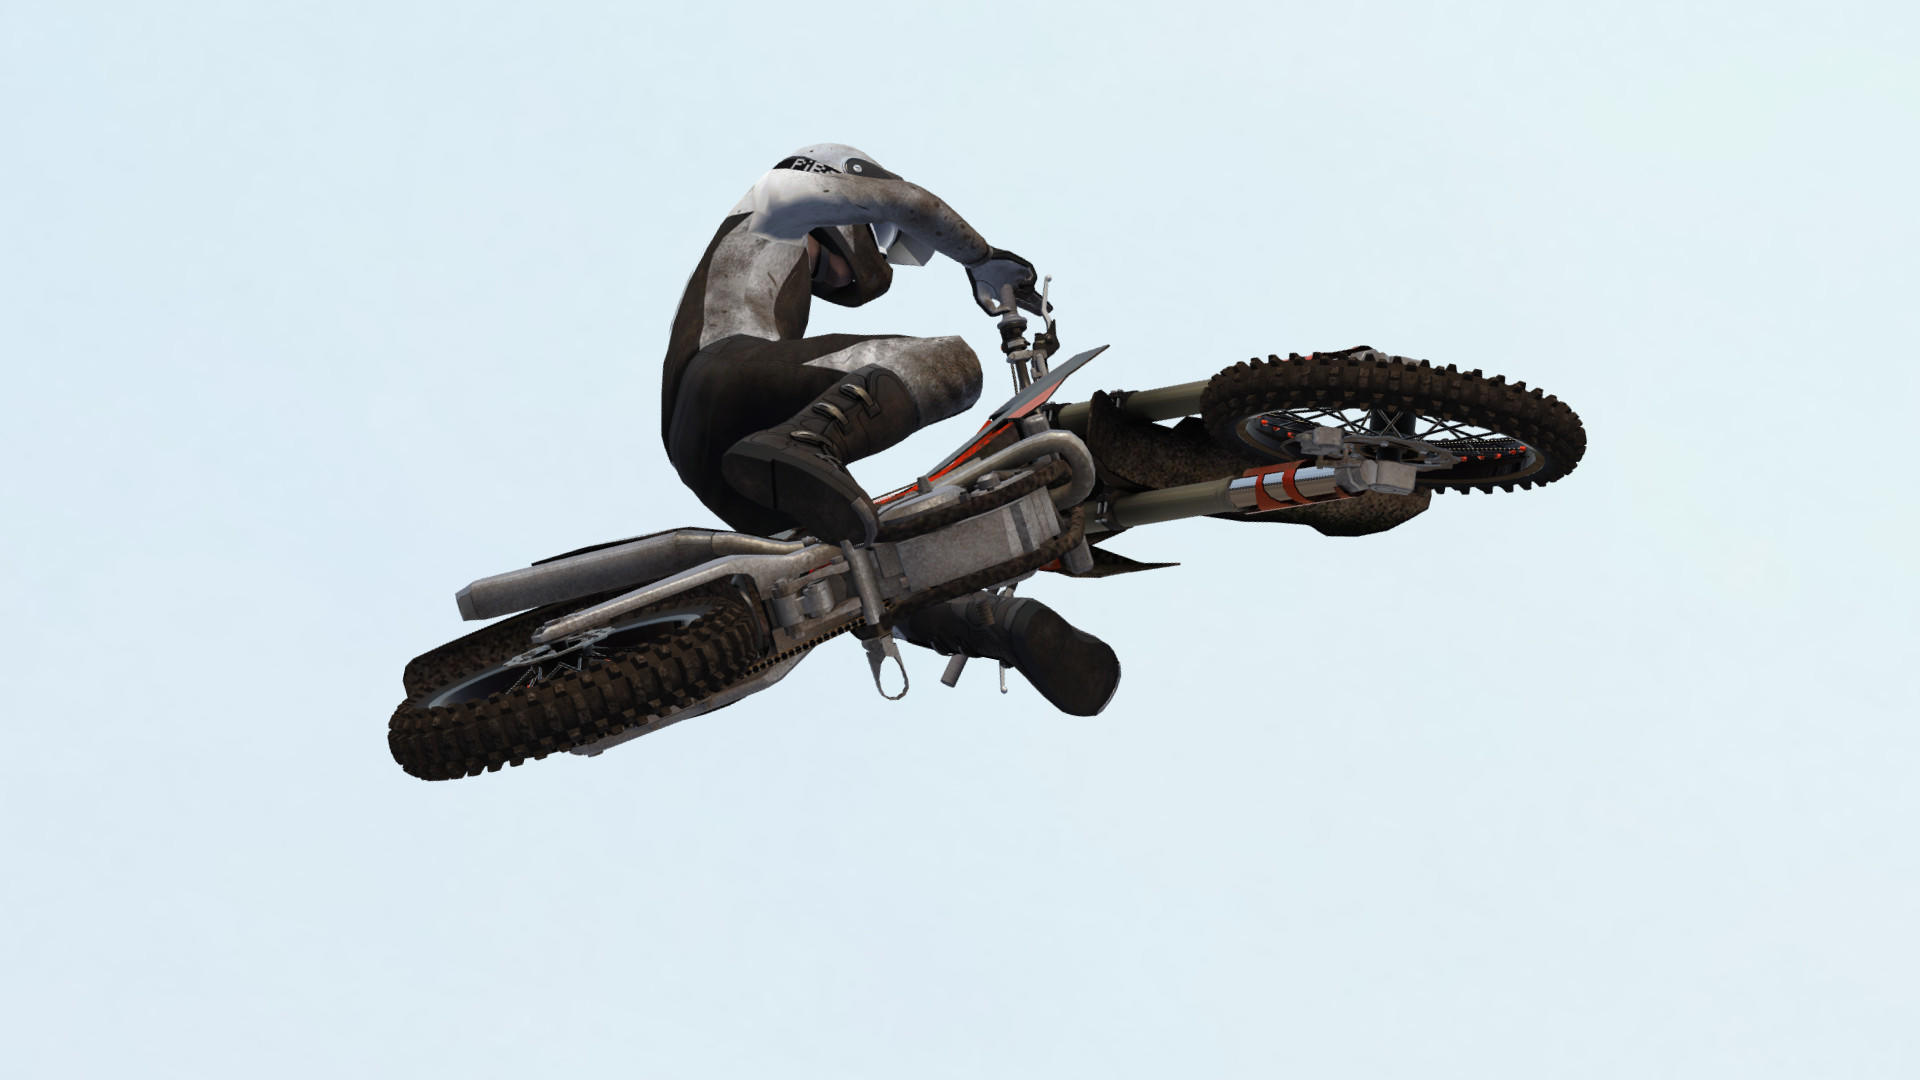 MX Bikes Grau Acrobatics android iOS apk download for free-TapTap